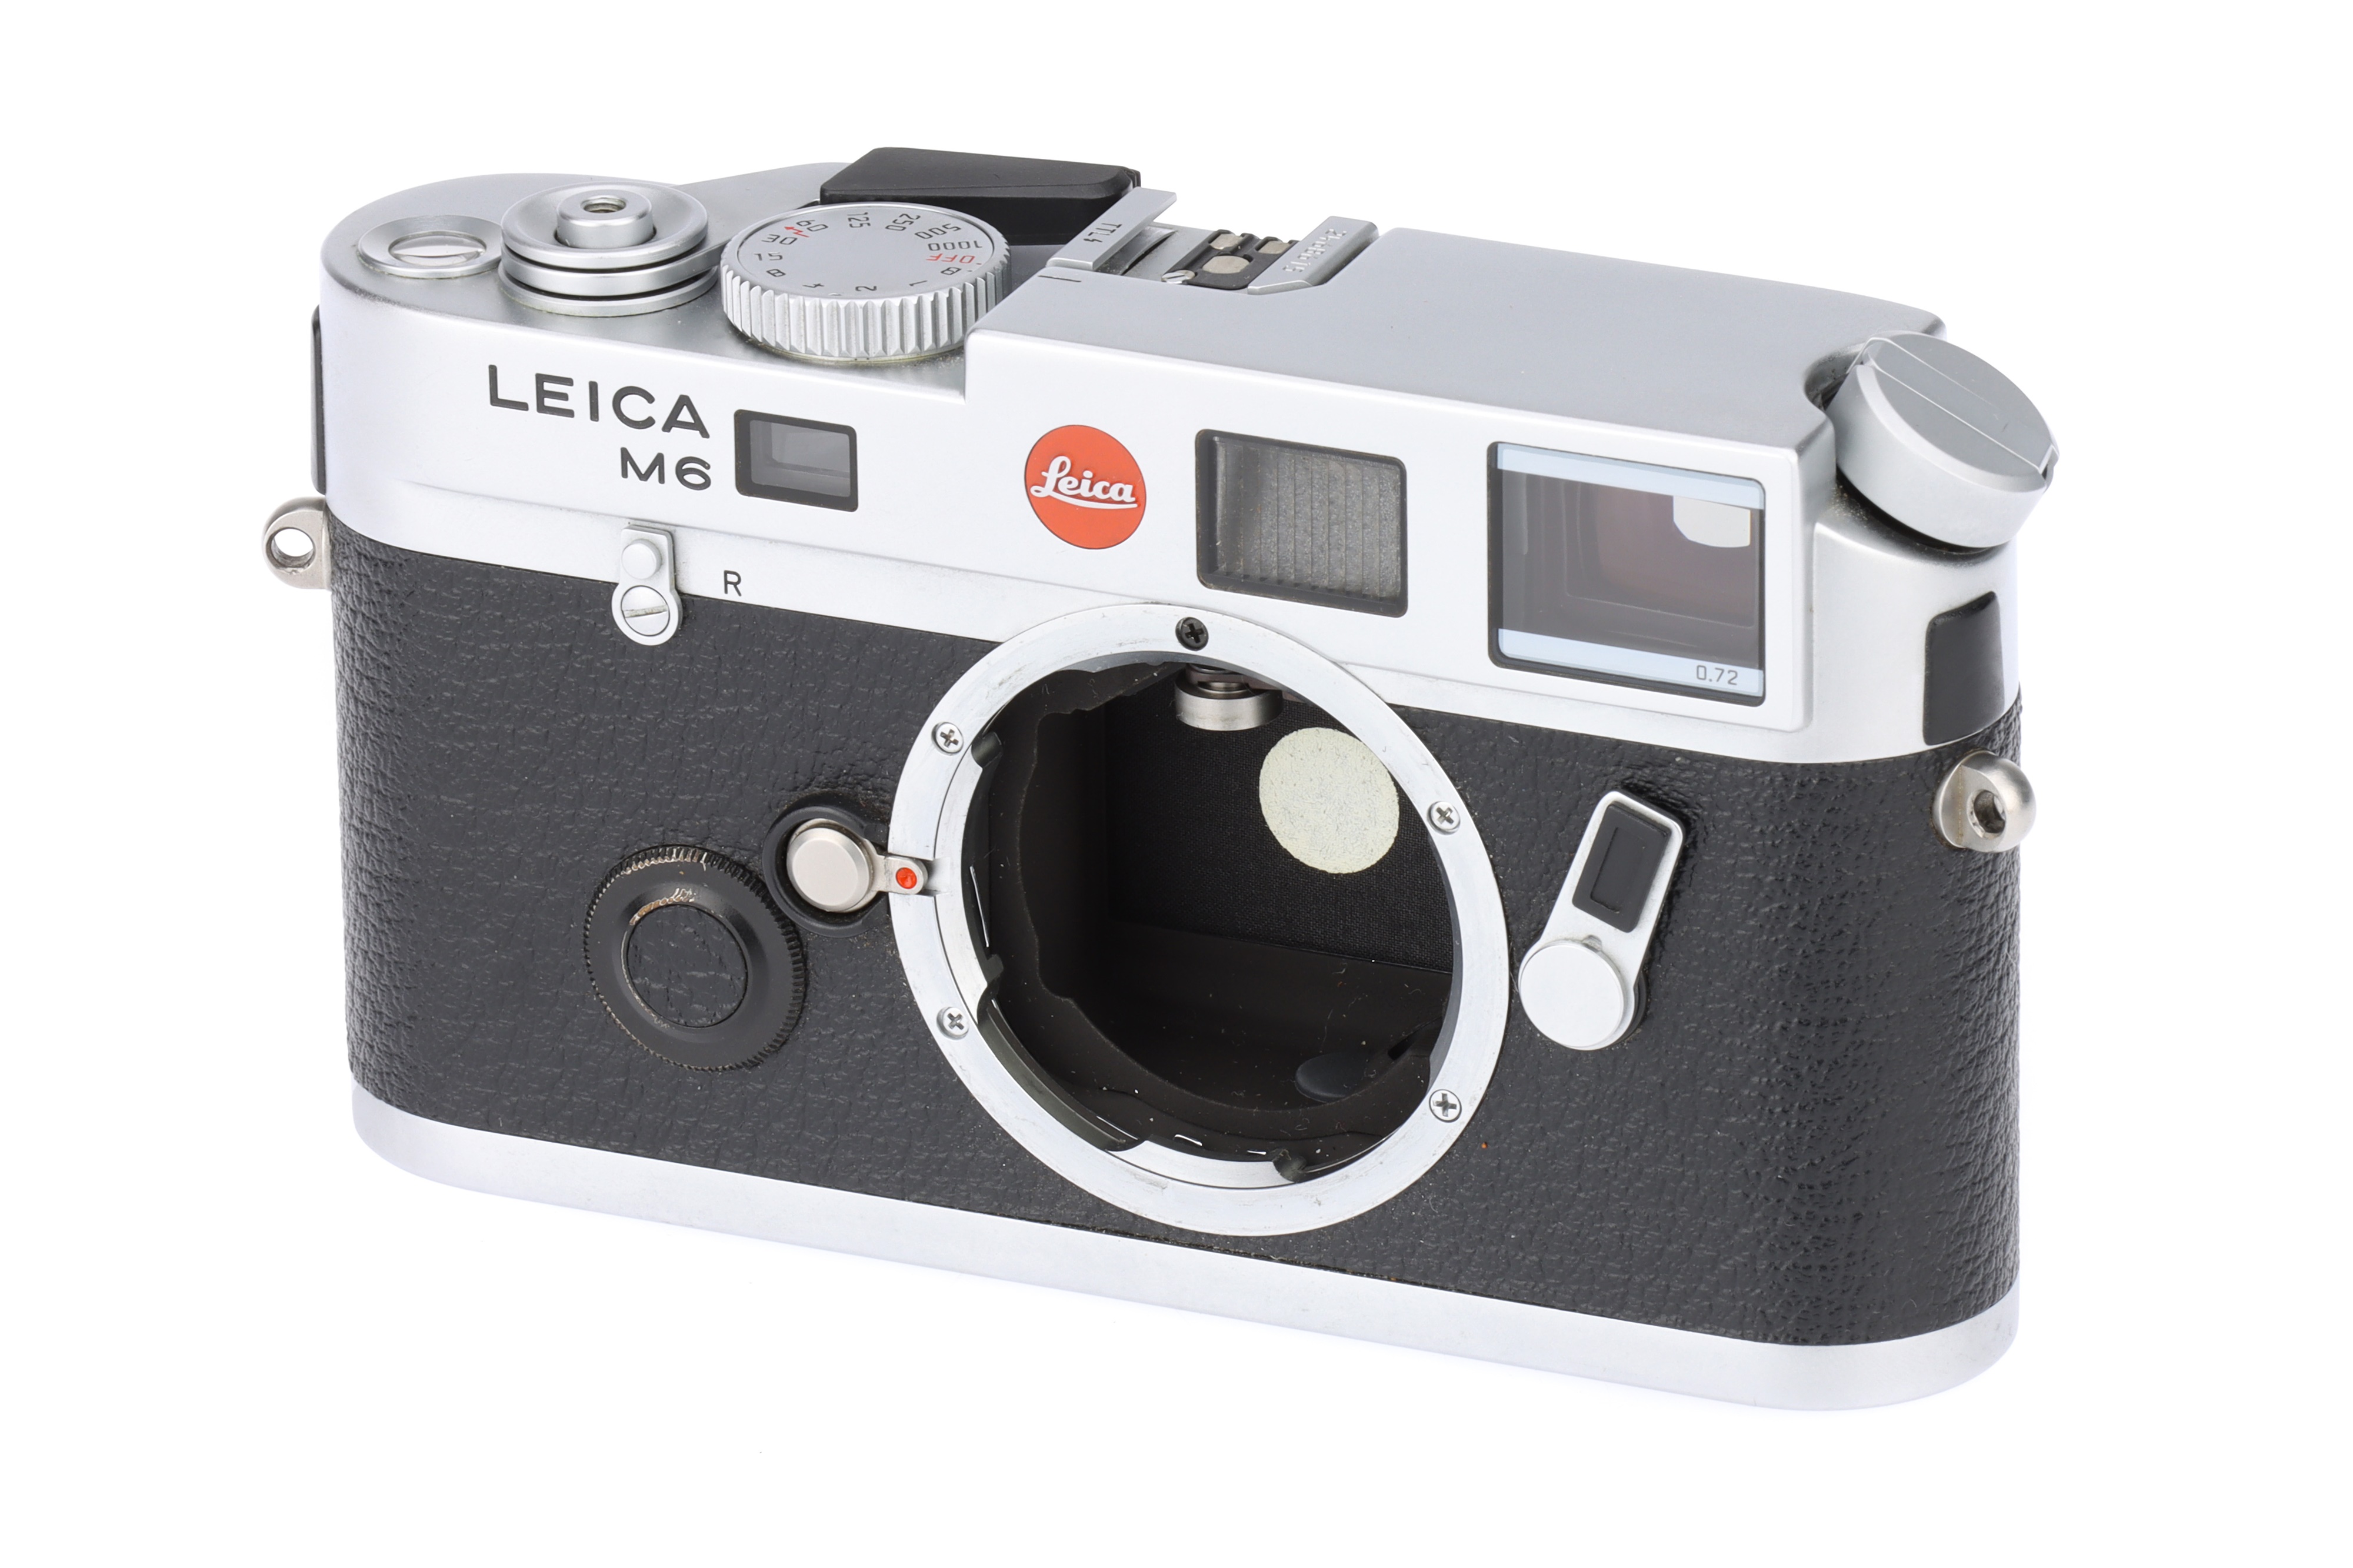 A Leica M6 0.72 TTL Rangefinder Body,